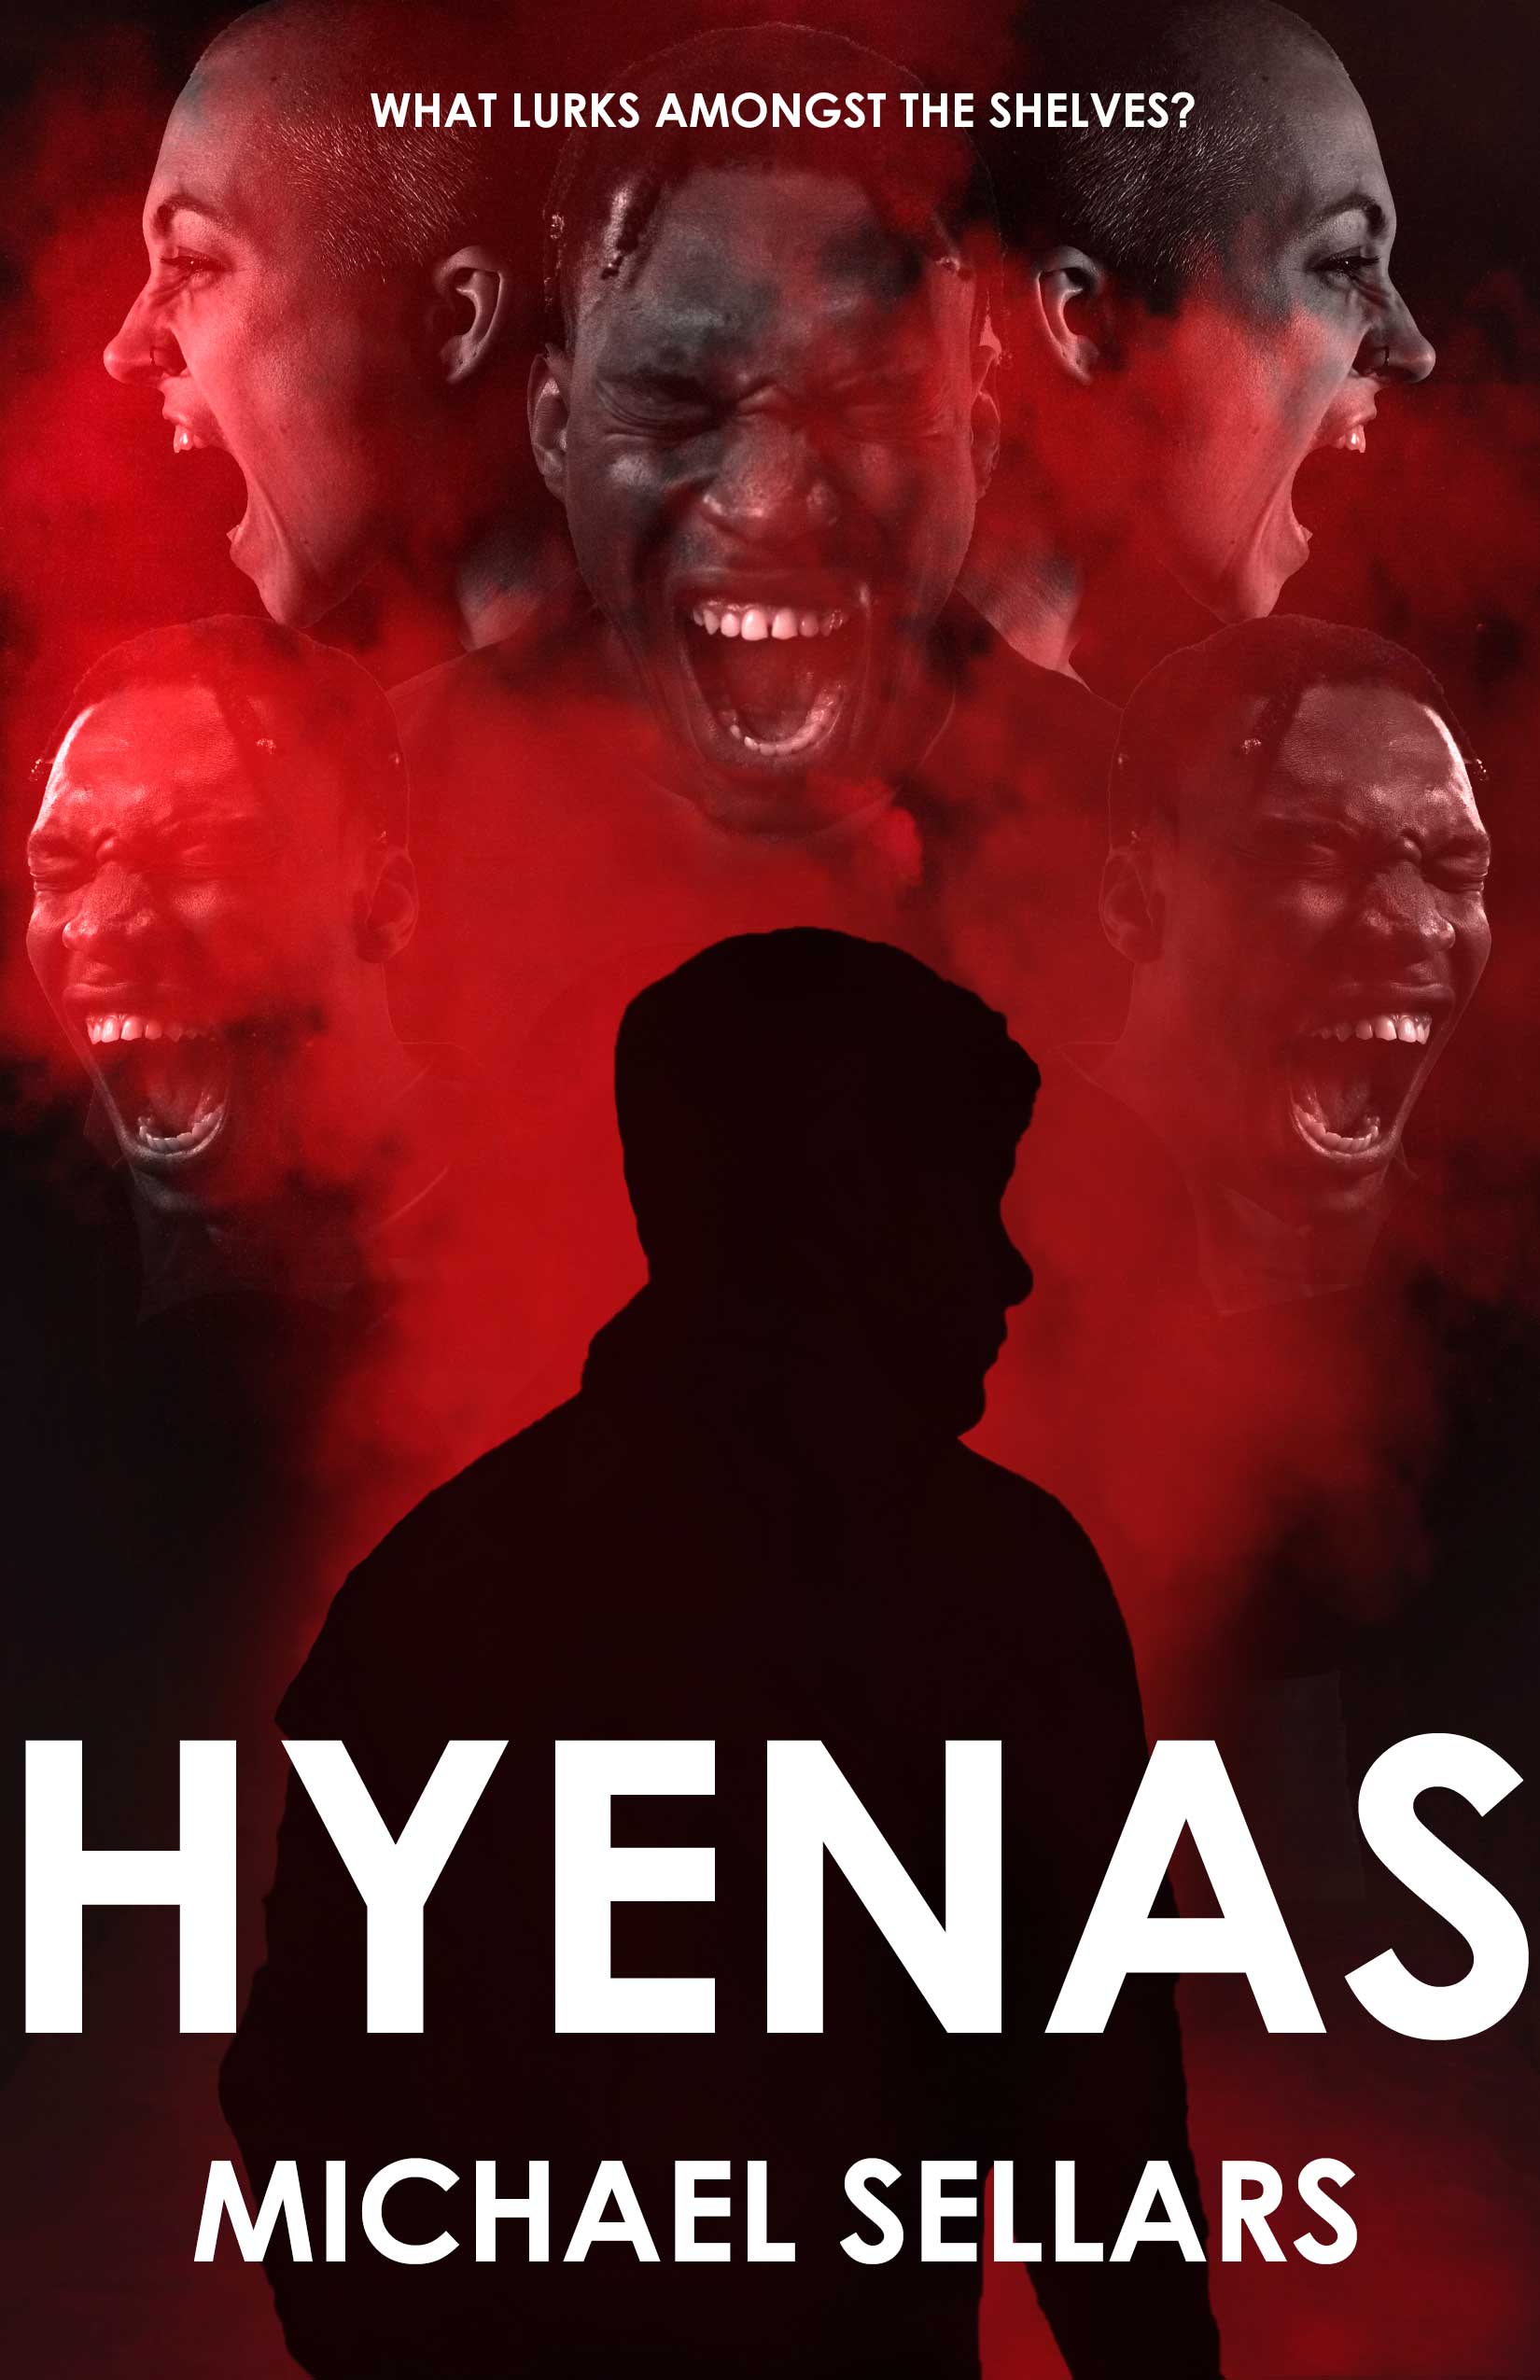 Hyenas a horror novel by Michael Sellars